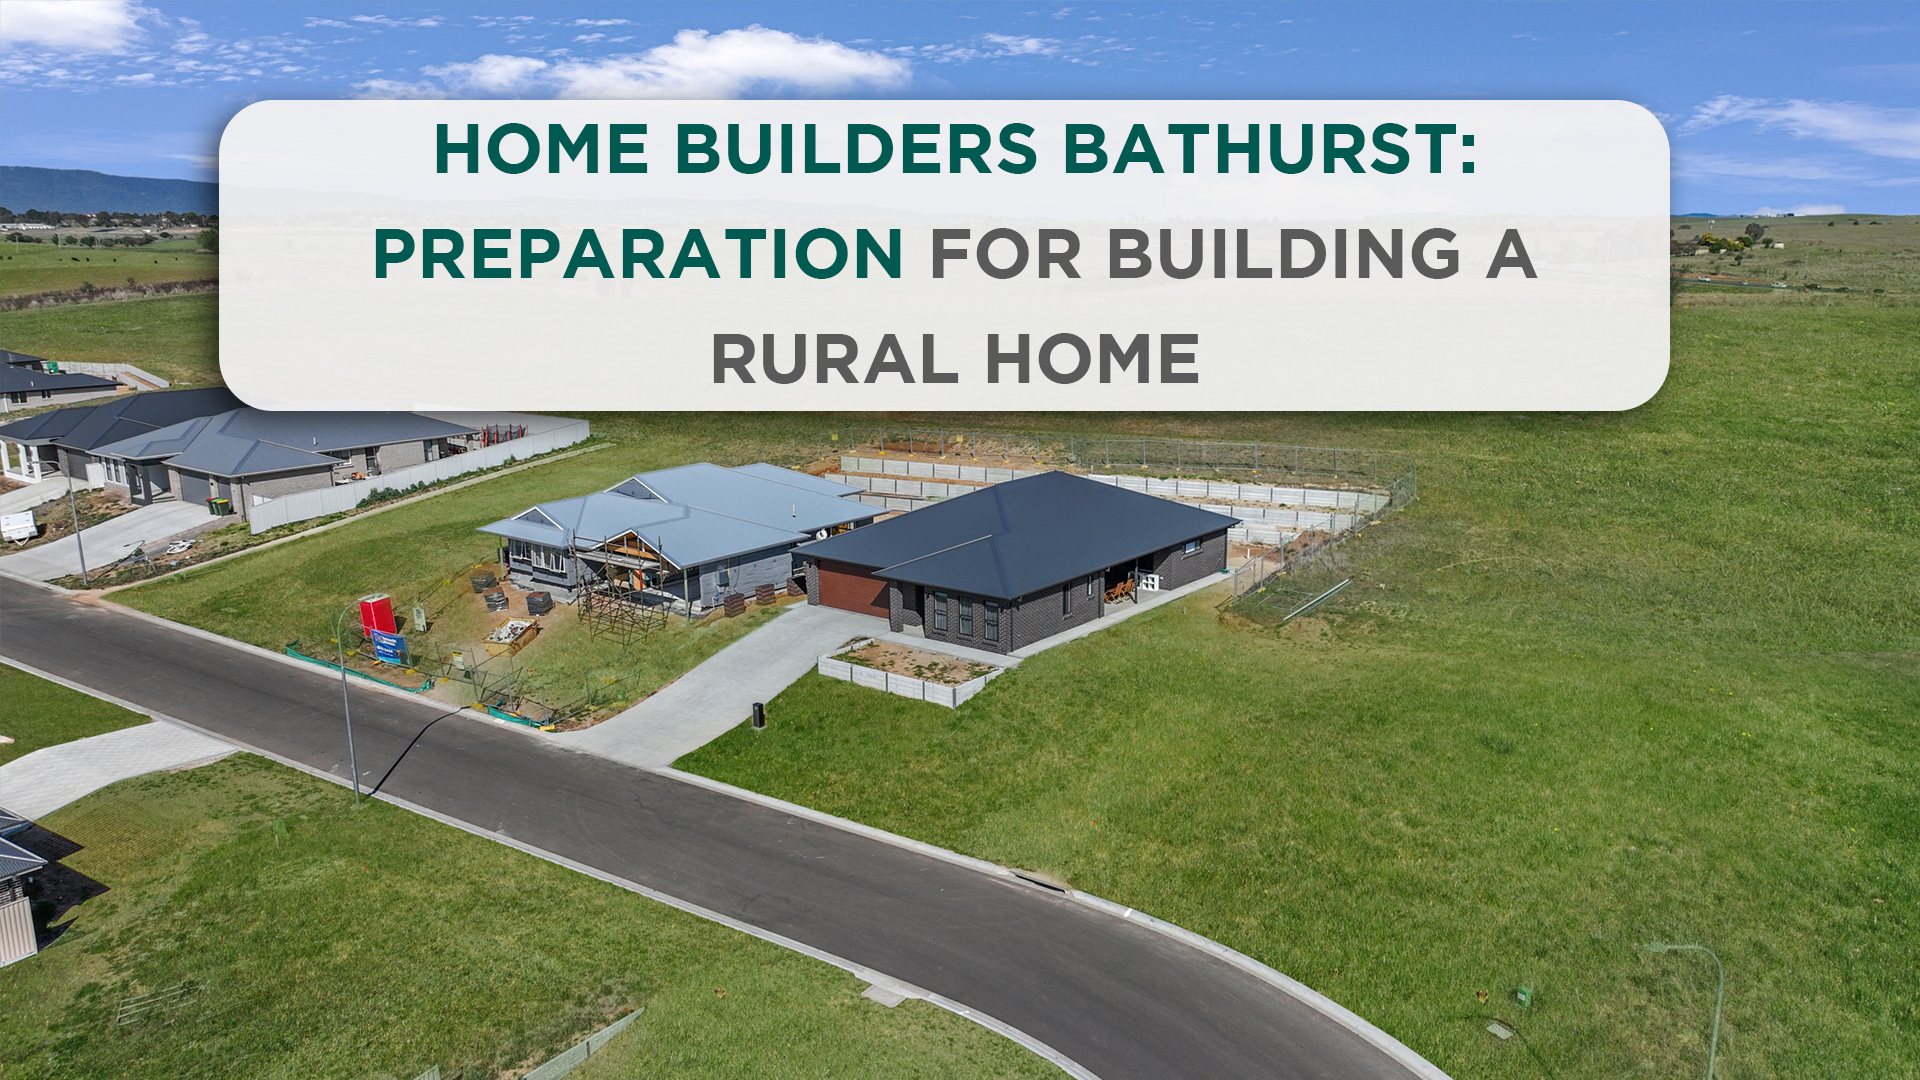 Home Builders Bathurst: Preparation for Building Rural home